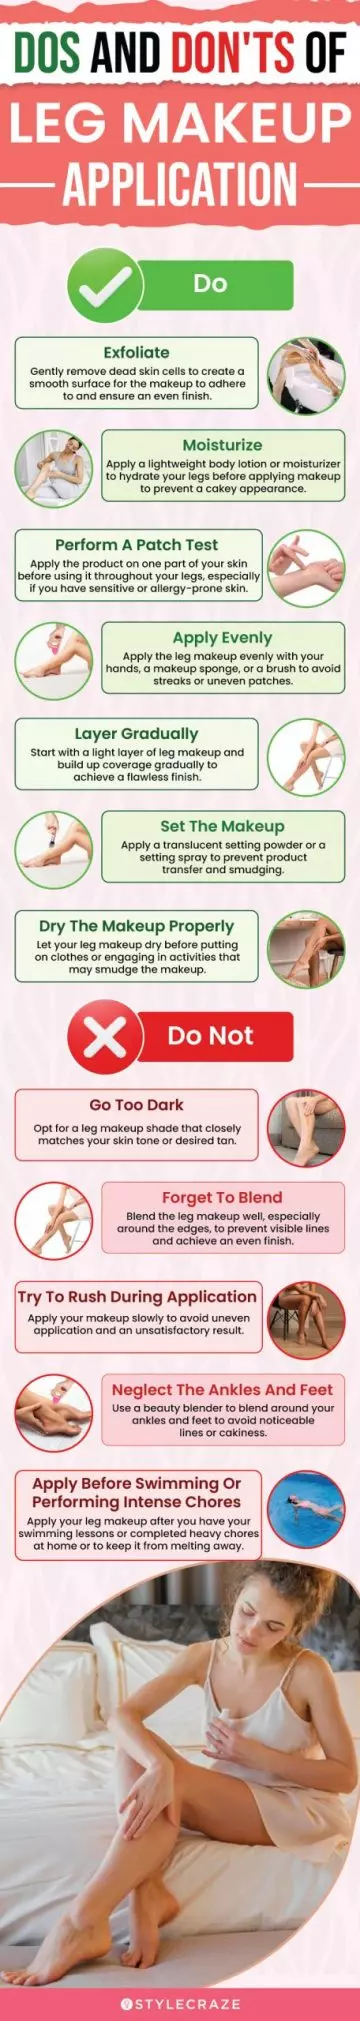 Leg Makeup Application: Dos And Don'ts (infographic)